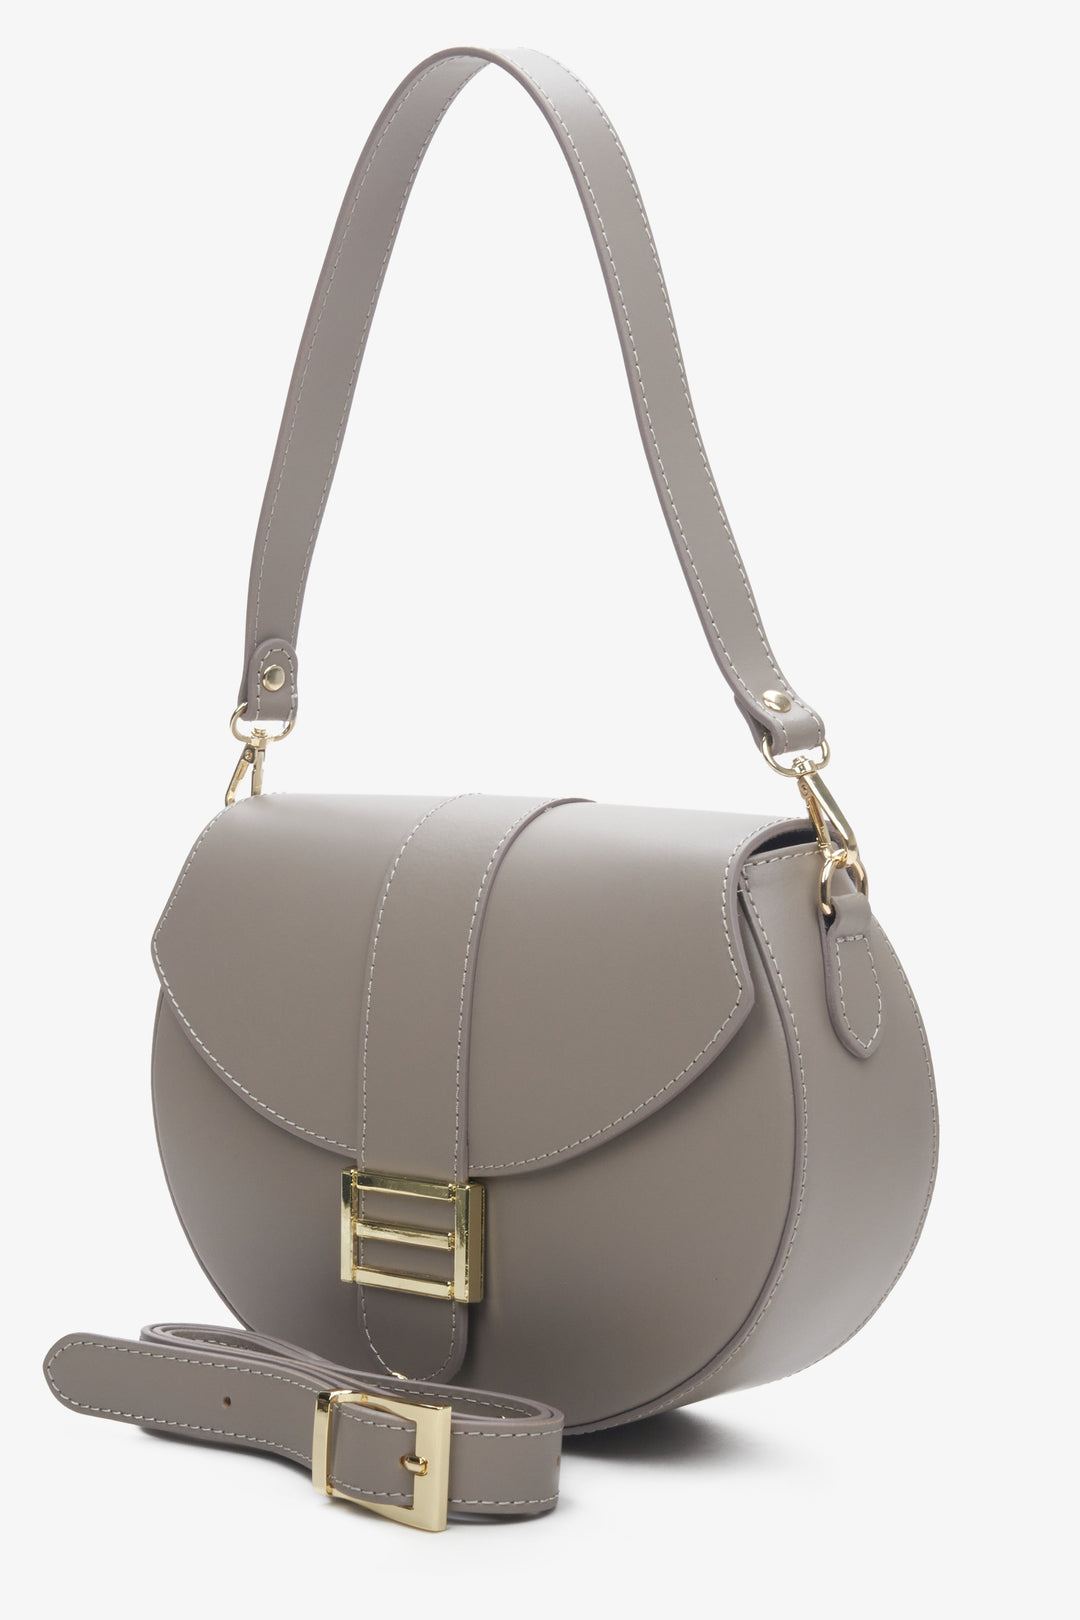 Grey leather handbag made of genuine leather.